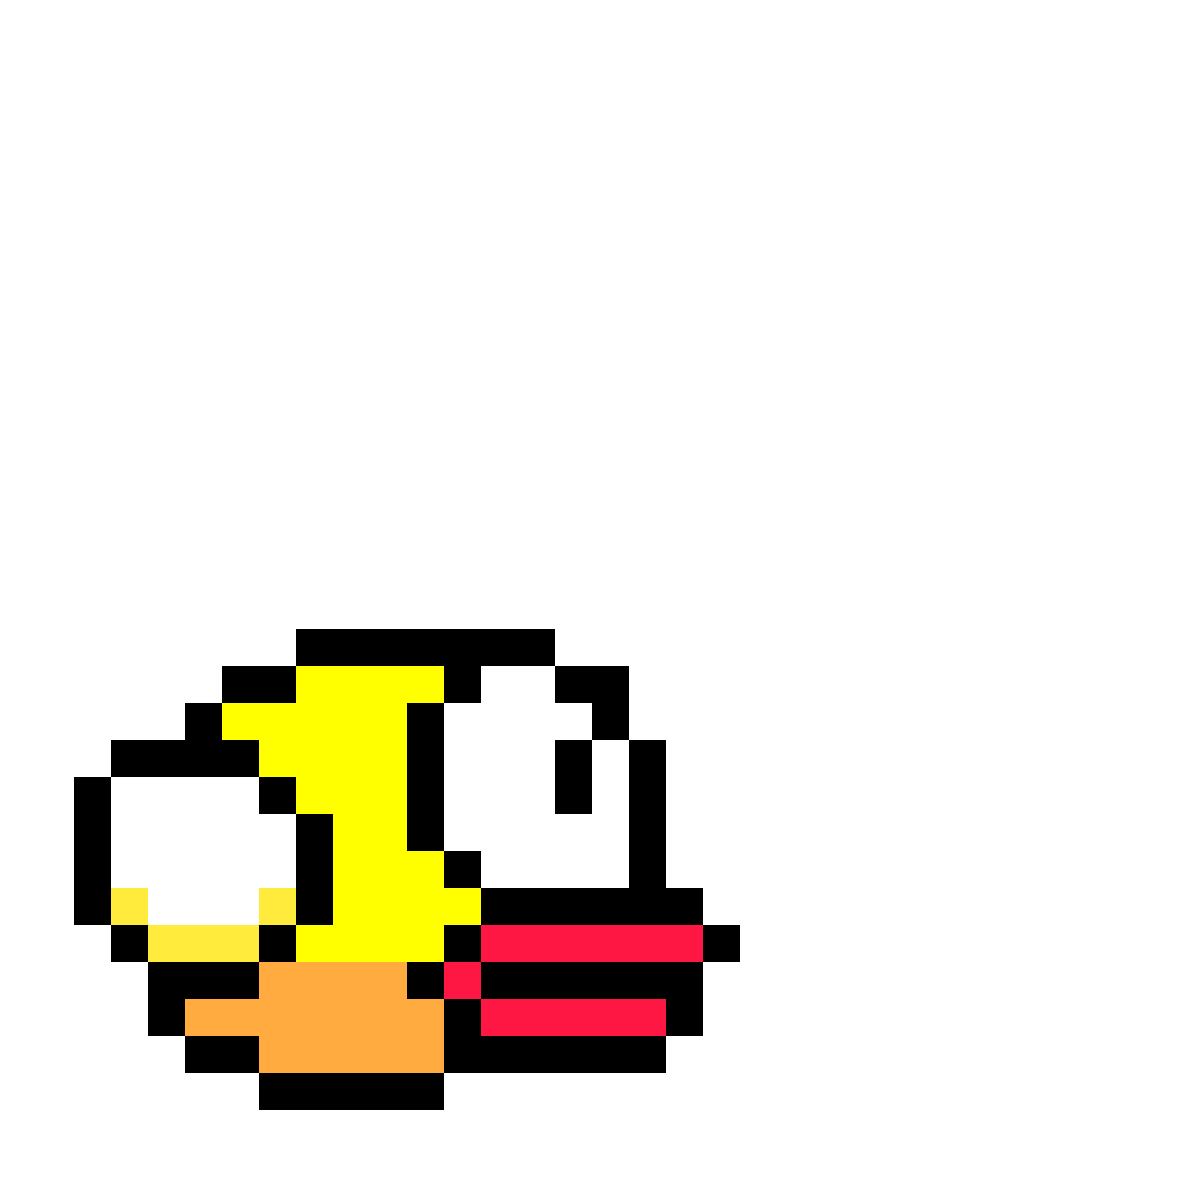 Flappy Bird Pixel